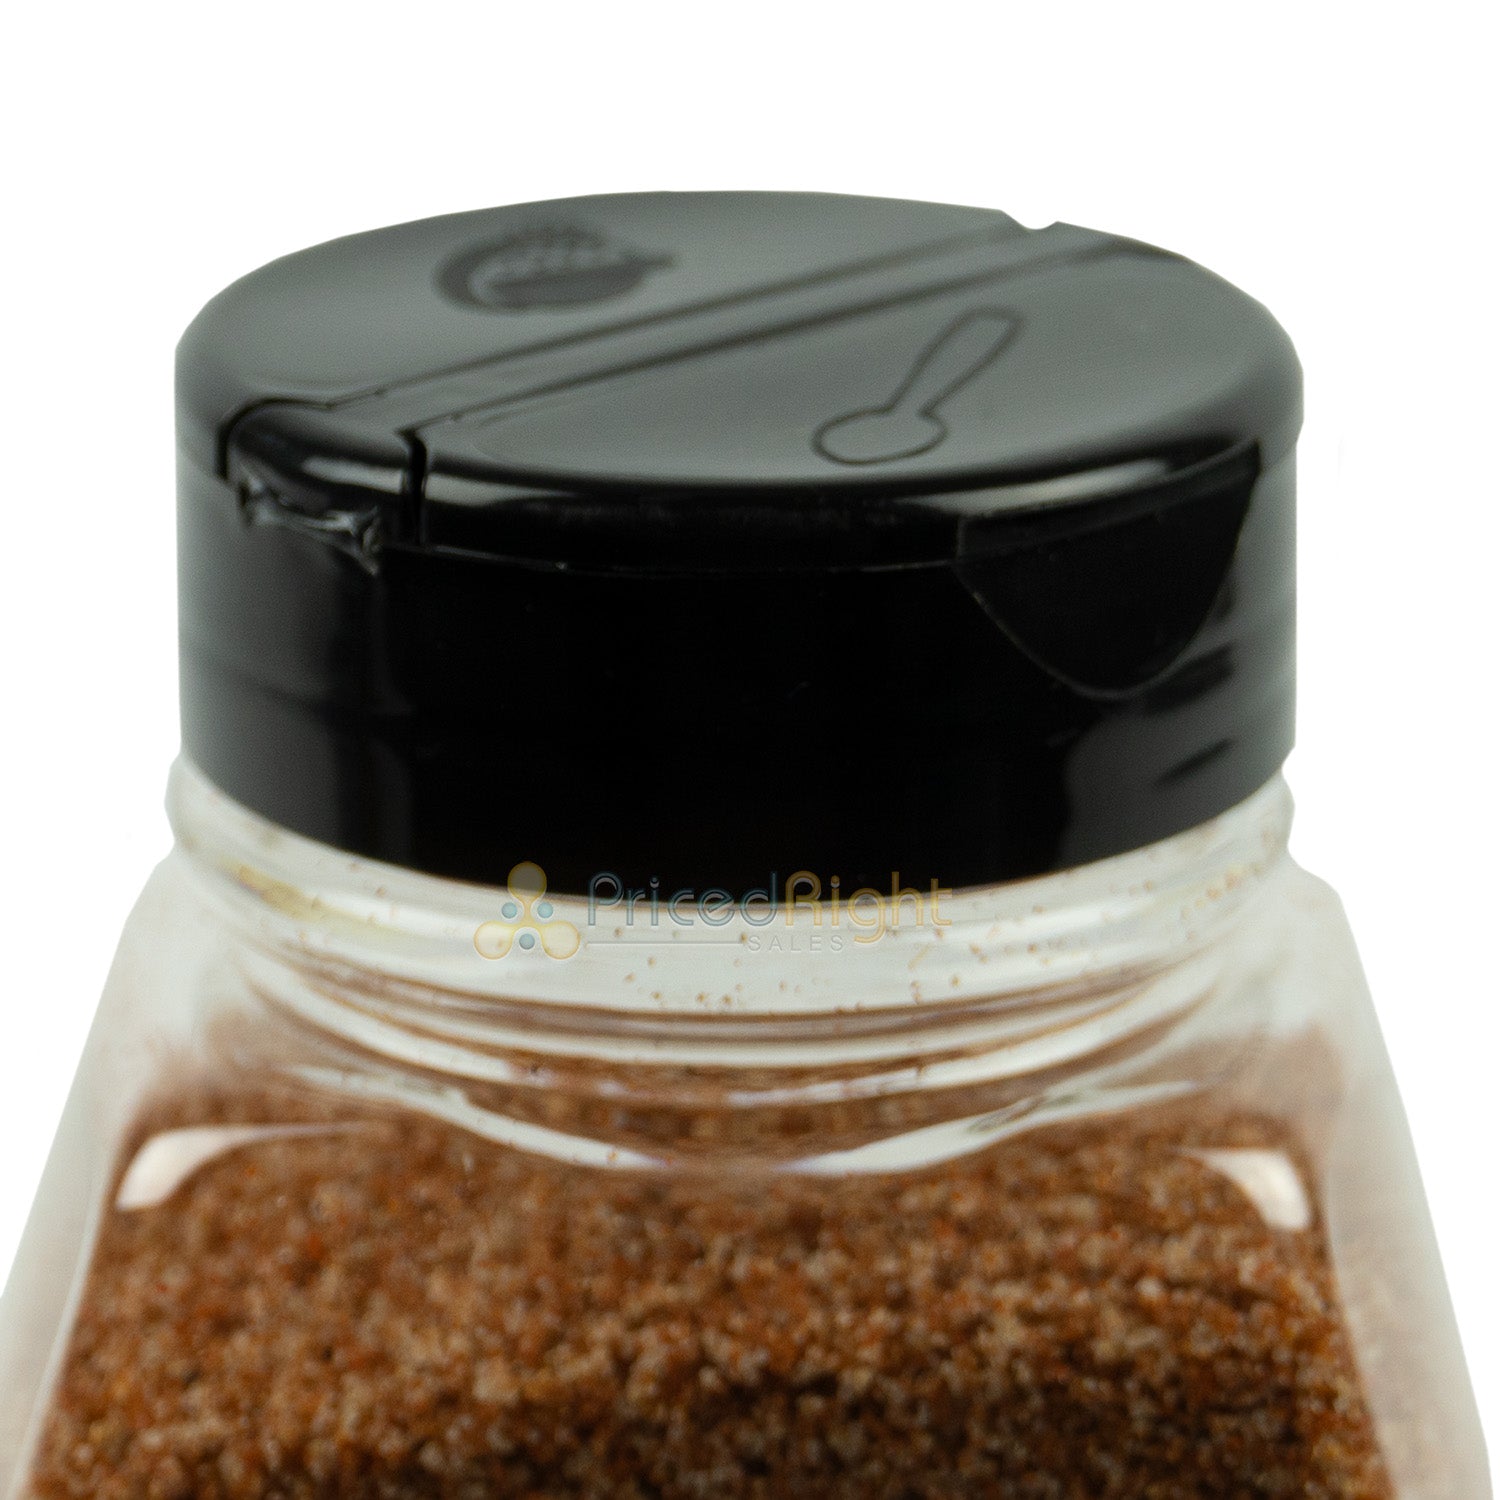 Q39 Brisket Dry Rub Balanced Blend Of Spice & Sweet Gluten Free No MSG 11 oz